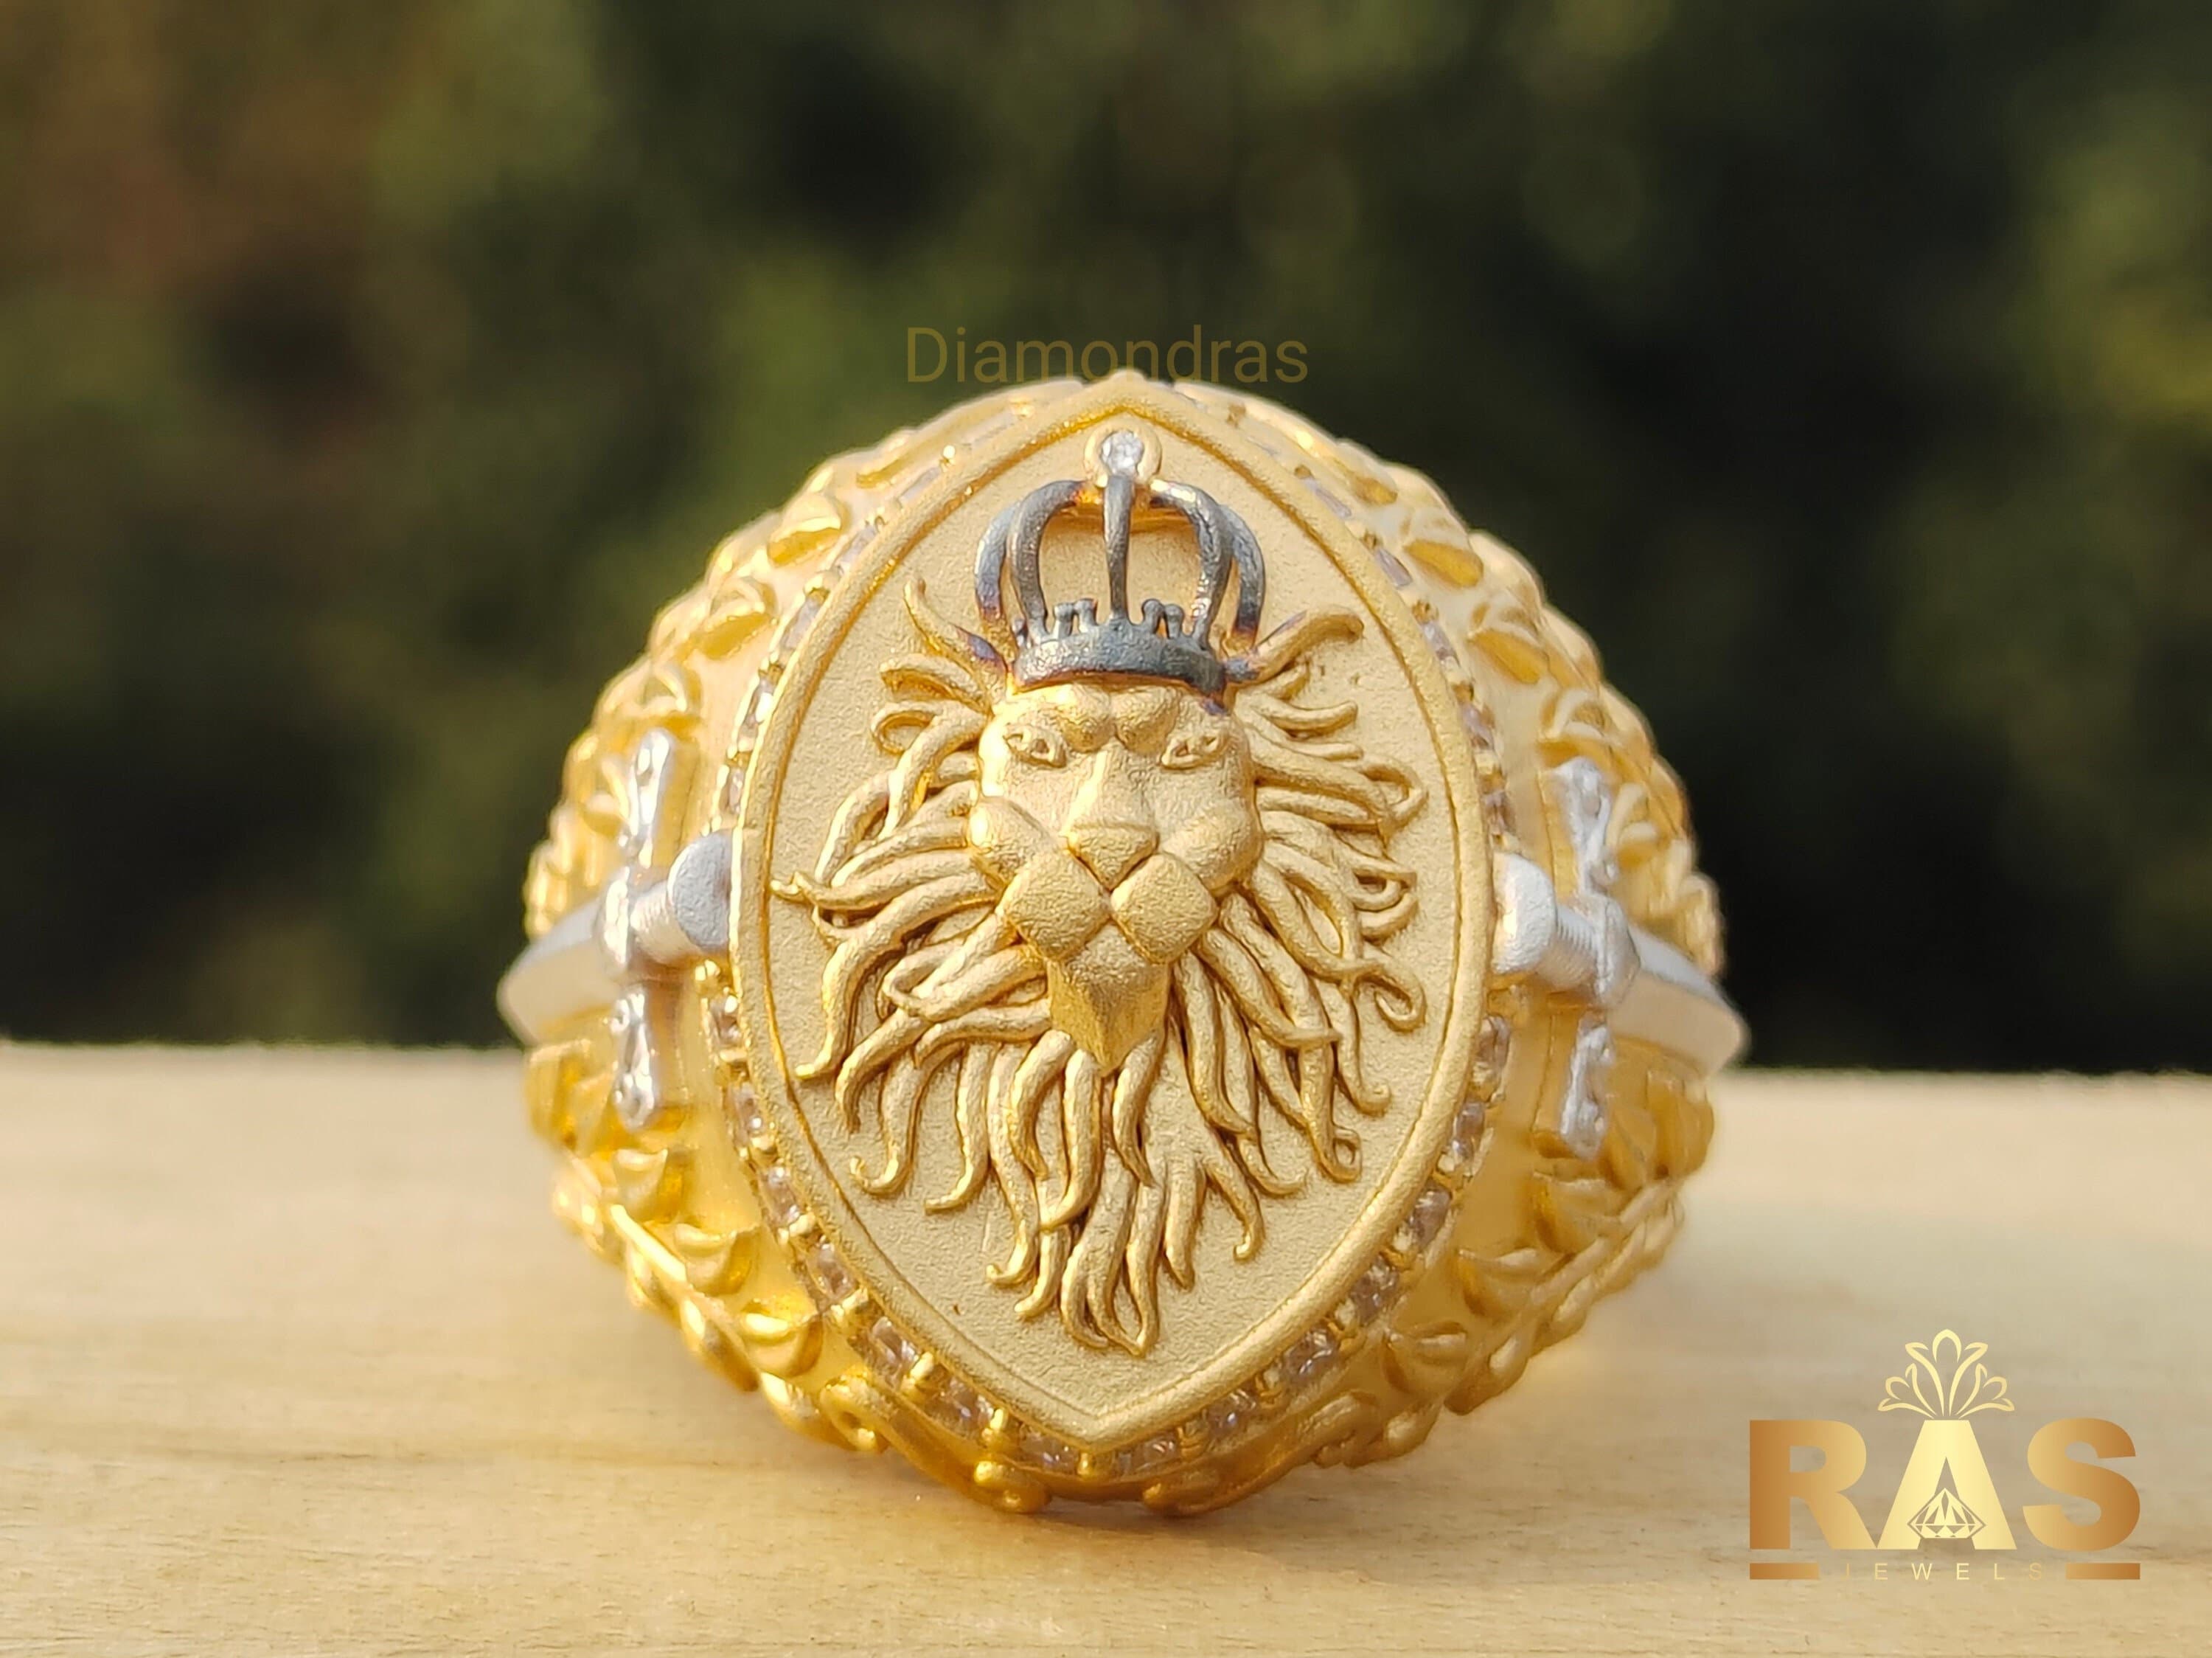 lion Ring golden-silver-black lion ring metal colour new design ring